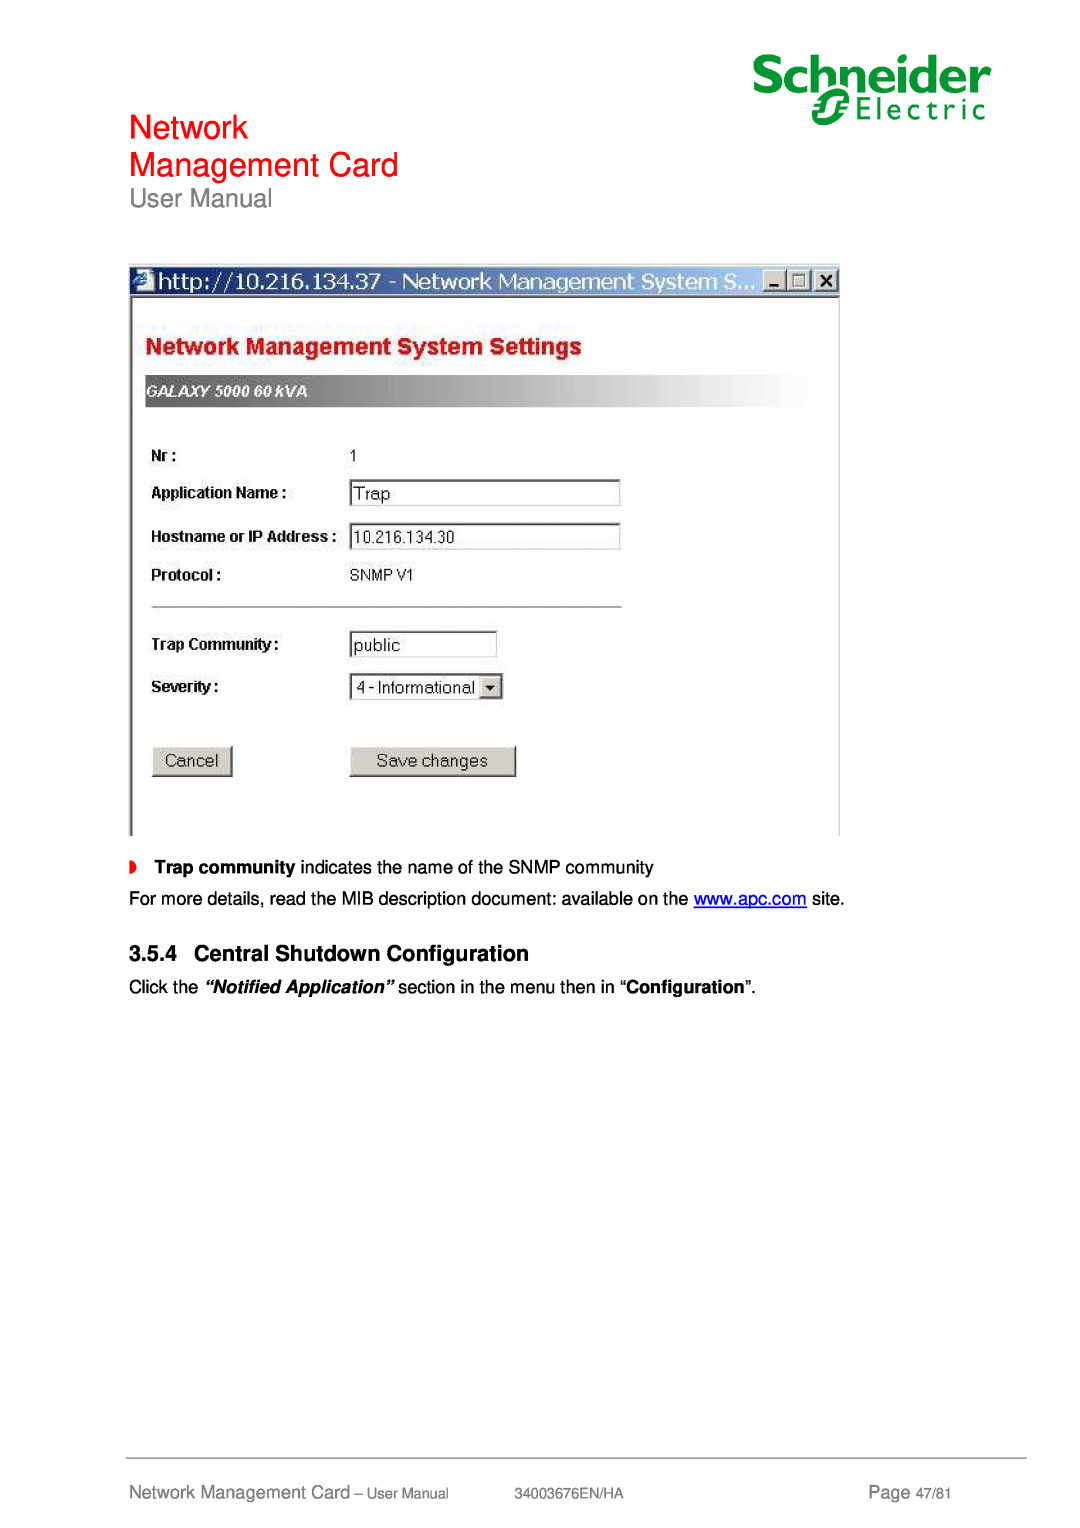 Schneider Electric 66074 Central Shutdown Configuration, Network Management Card, User Manual, Page 47/81, 34003676EN/HA 